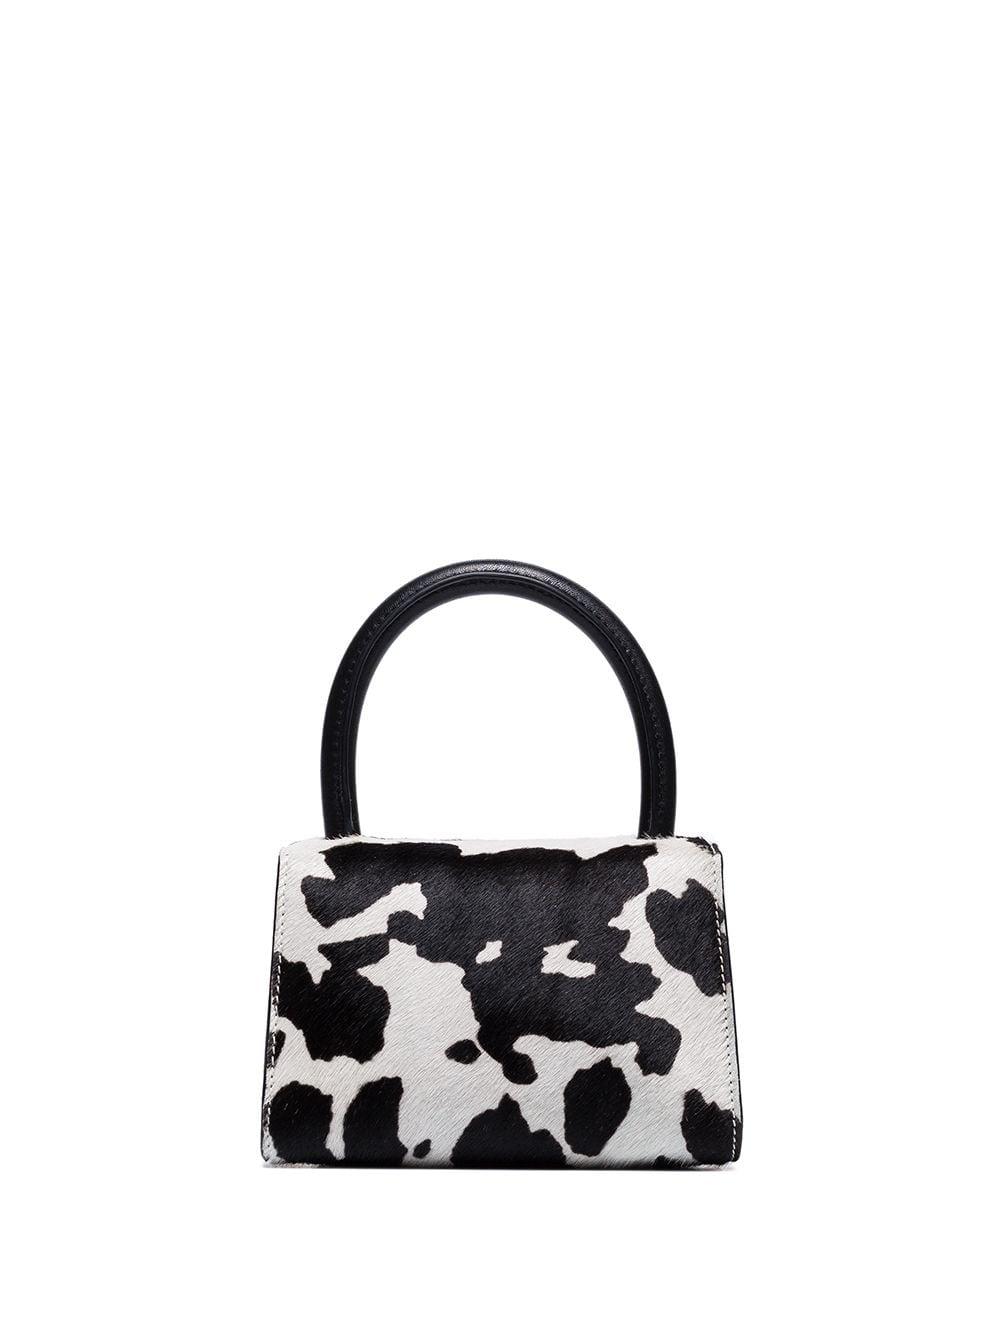 BY FAR Mini Cow Print Cross-body Bag in Black